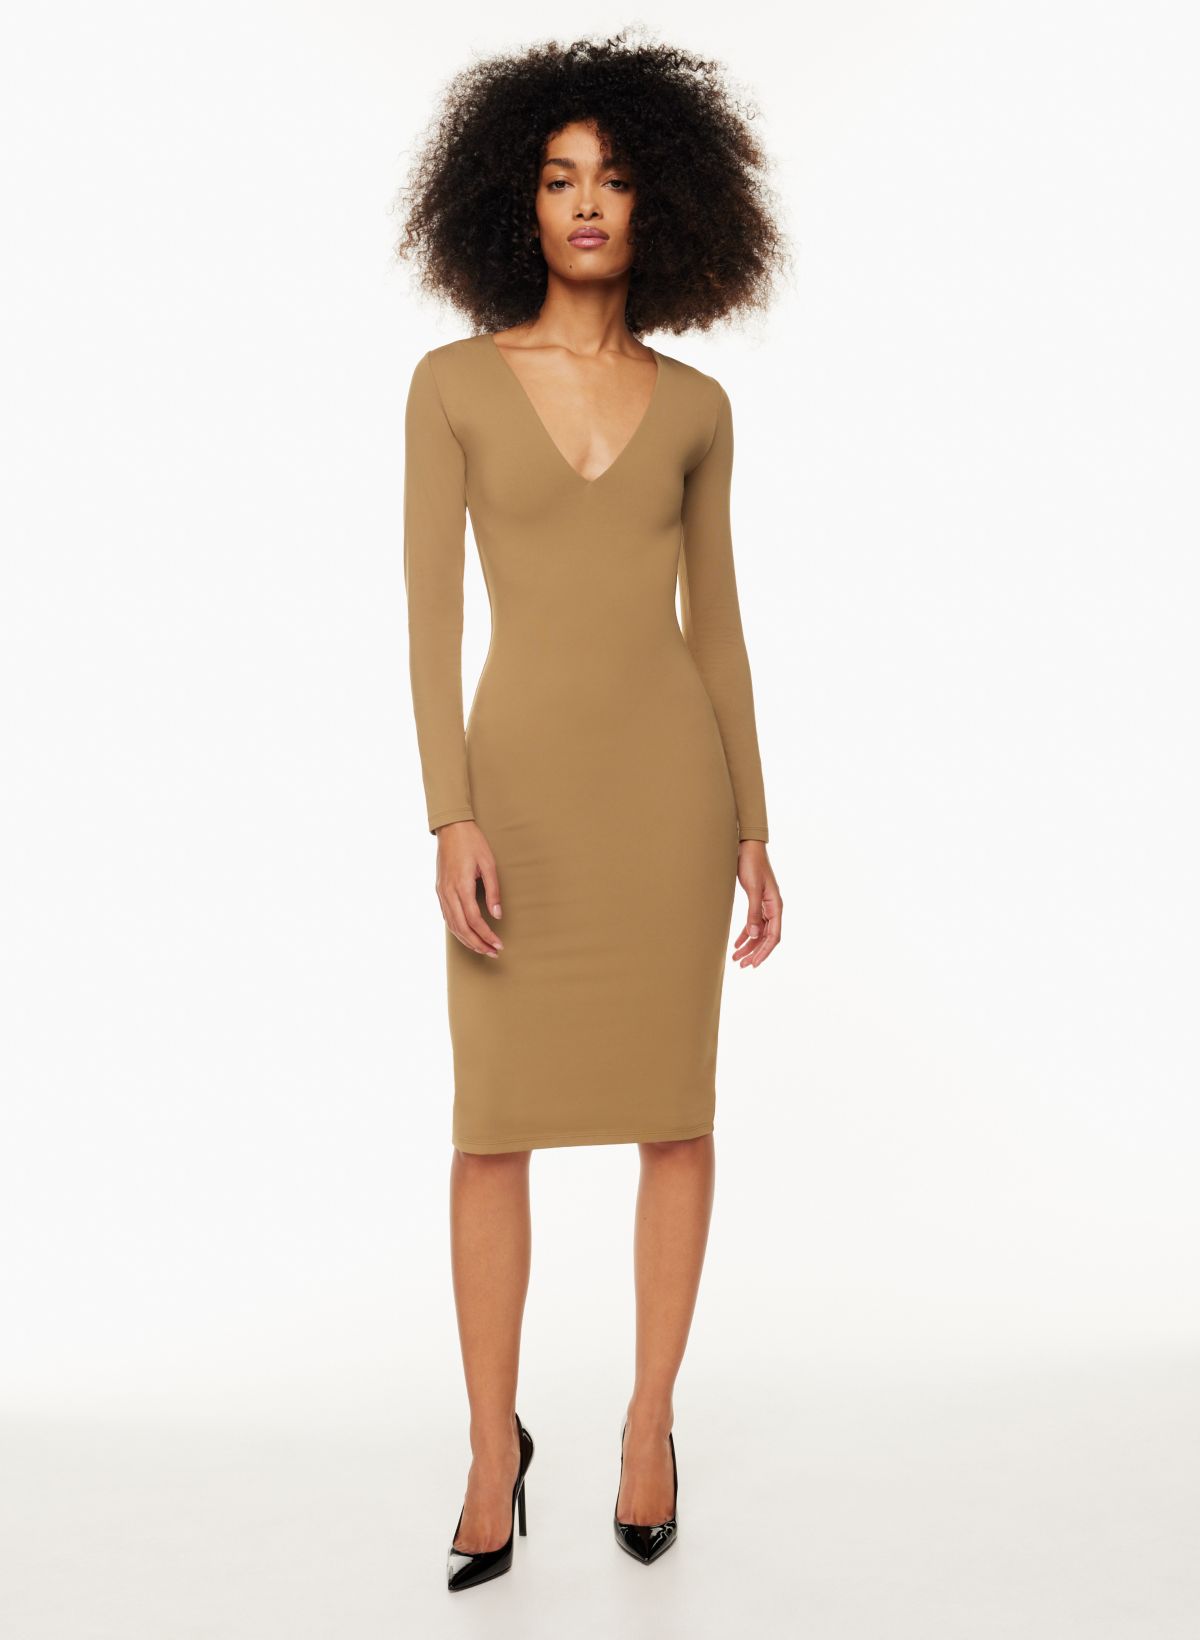 Hoodie Dress Above Knee Length Slim Pure Color A-line Dress Lady